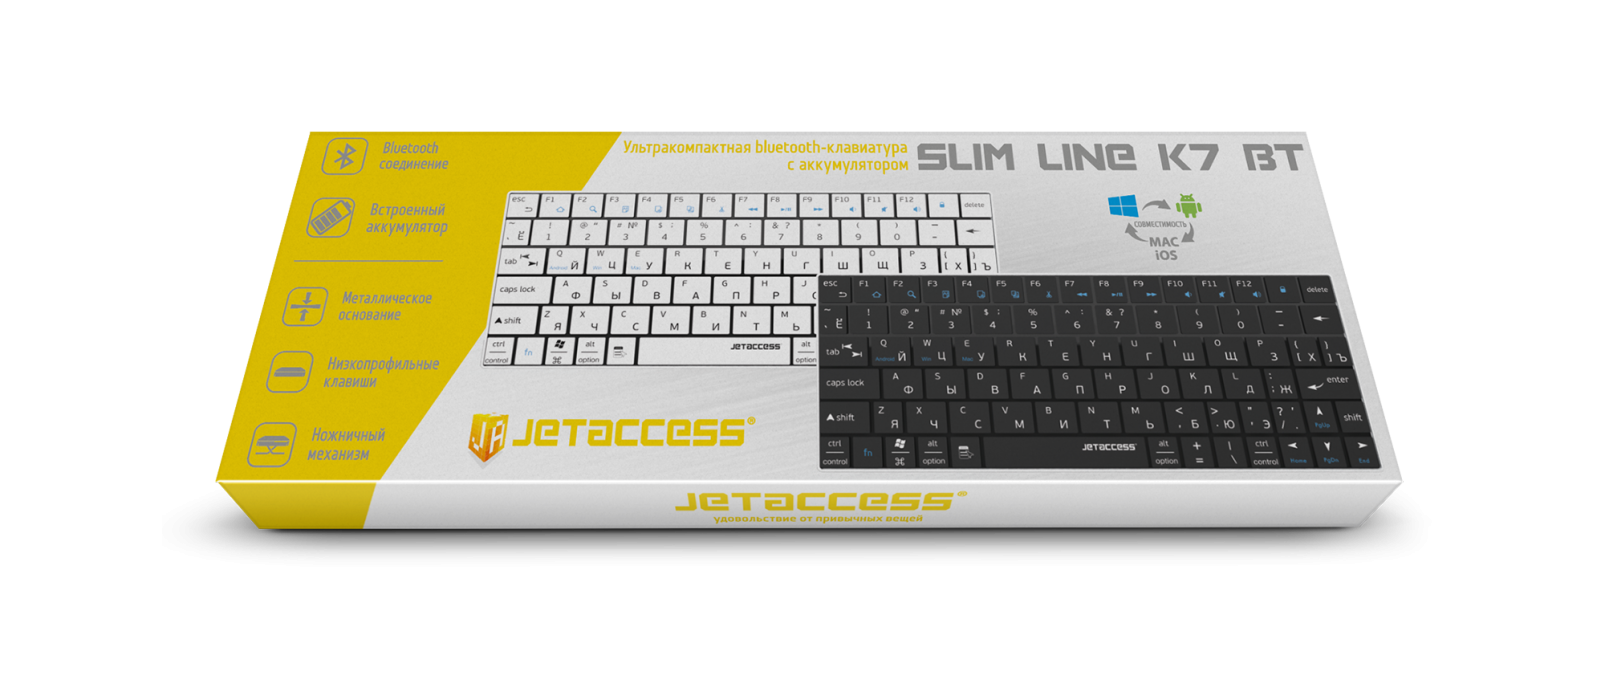 Ультракомпактная bluetooth-клавиатура с аккумулятором SLIM LINE K7 BT7